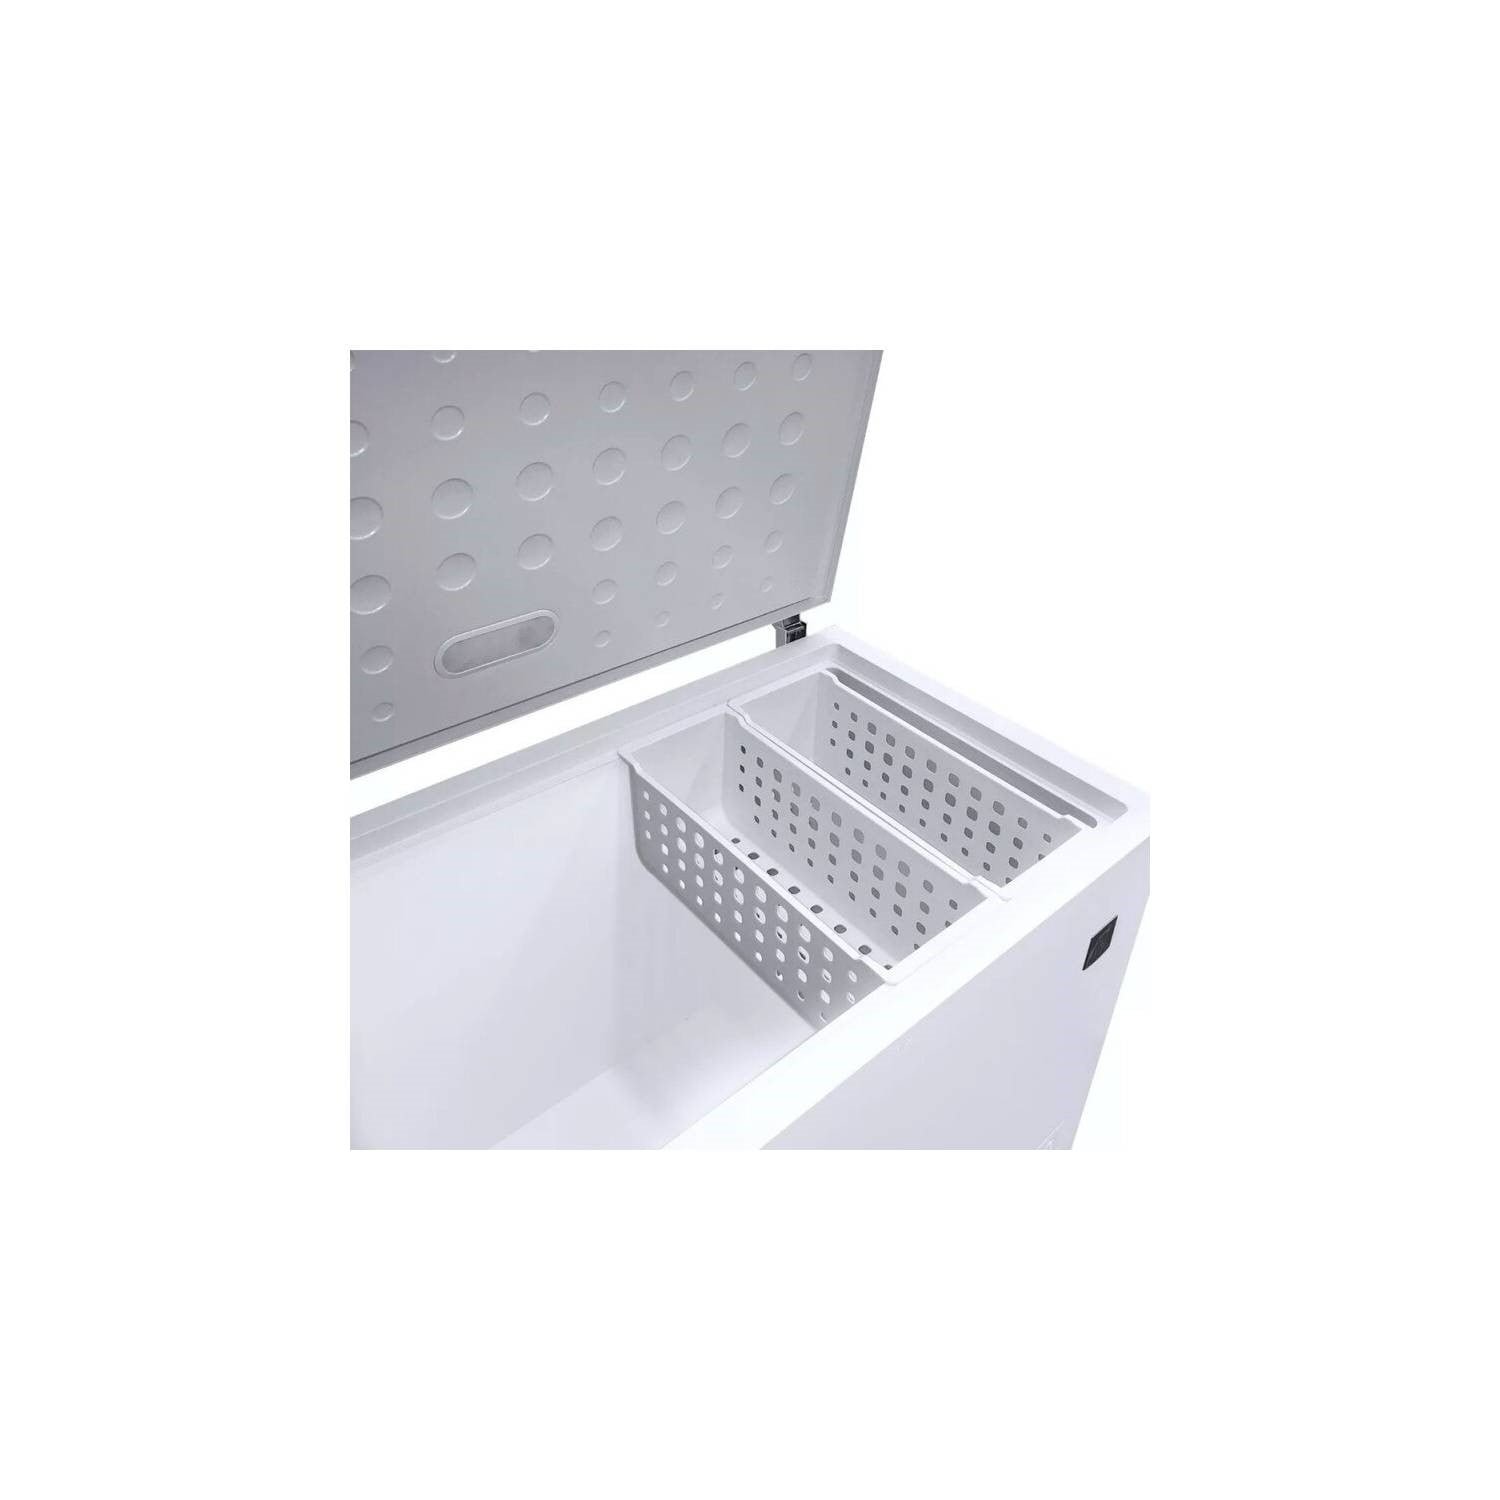 Congelador Horizontal Electrolux 380l Pcm Led - Electrodomésticos Hogar  Innovar %